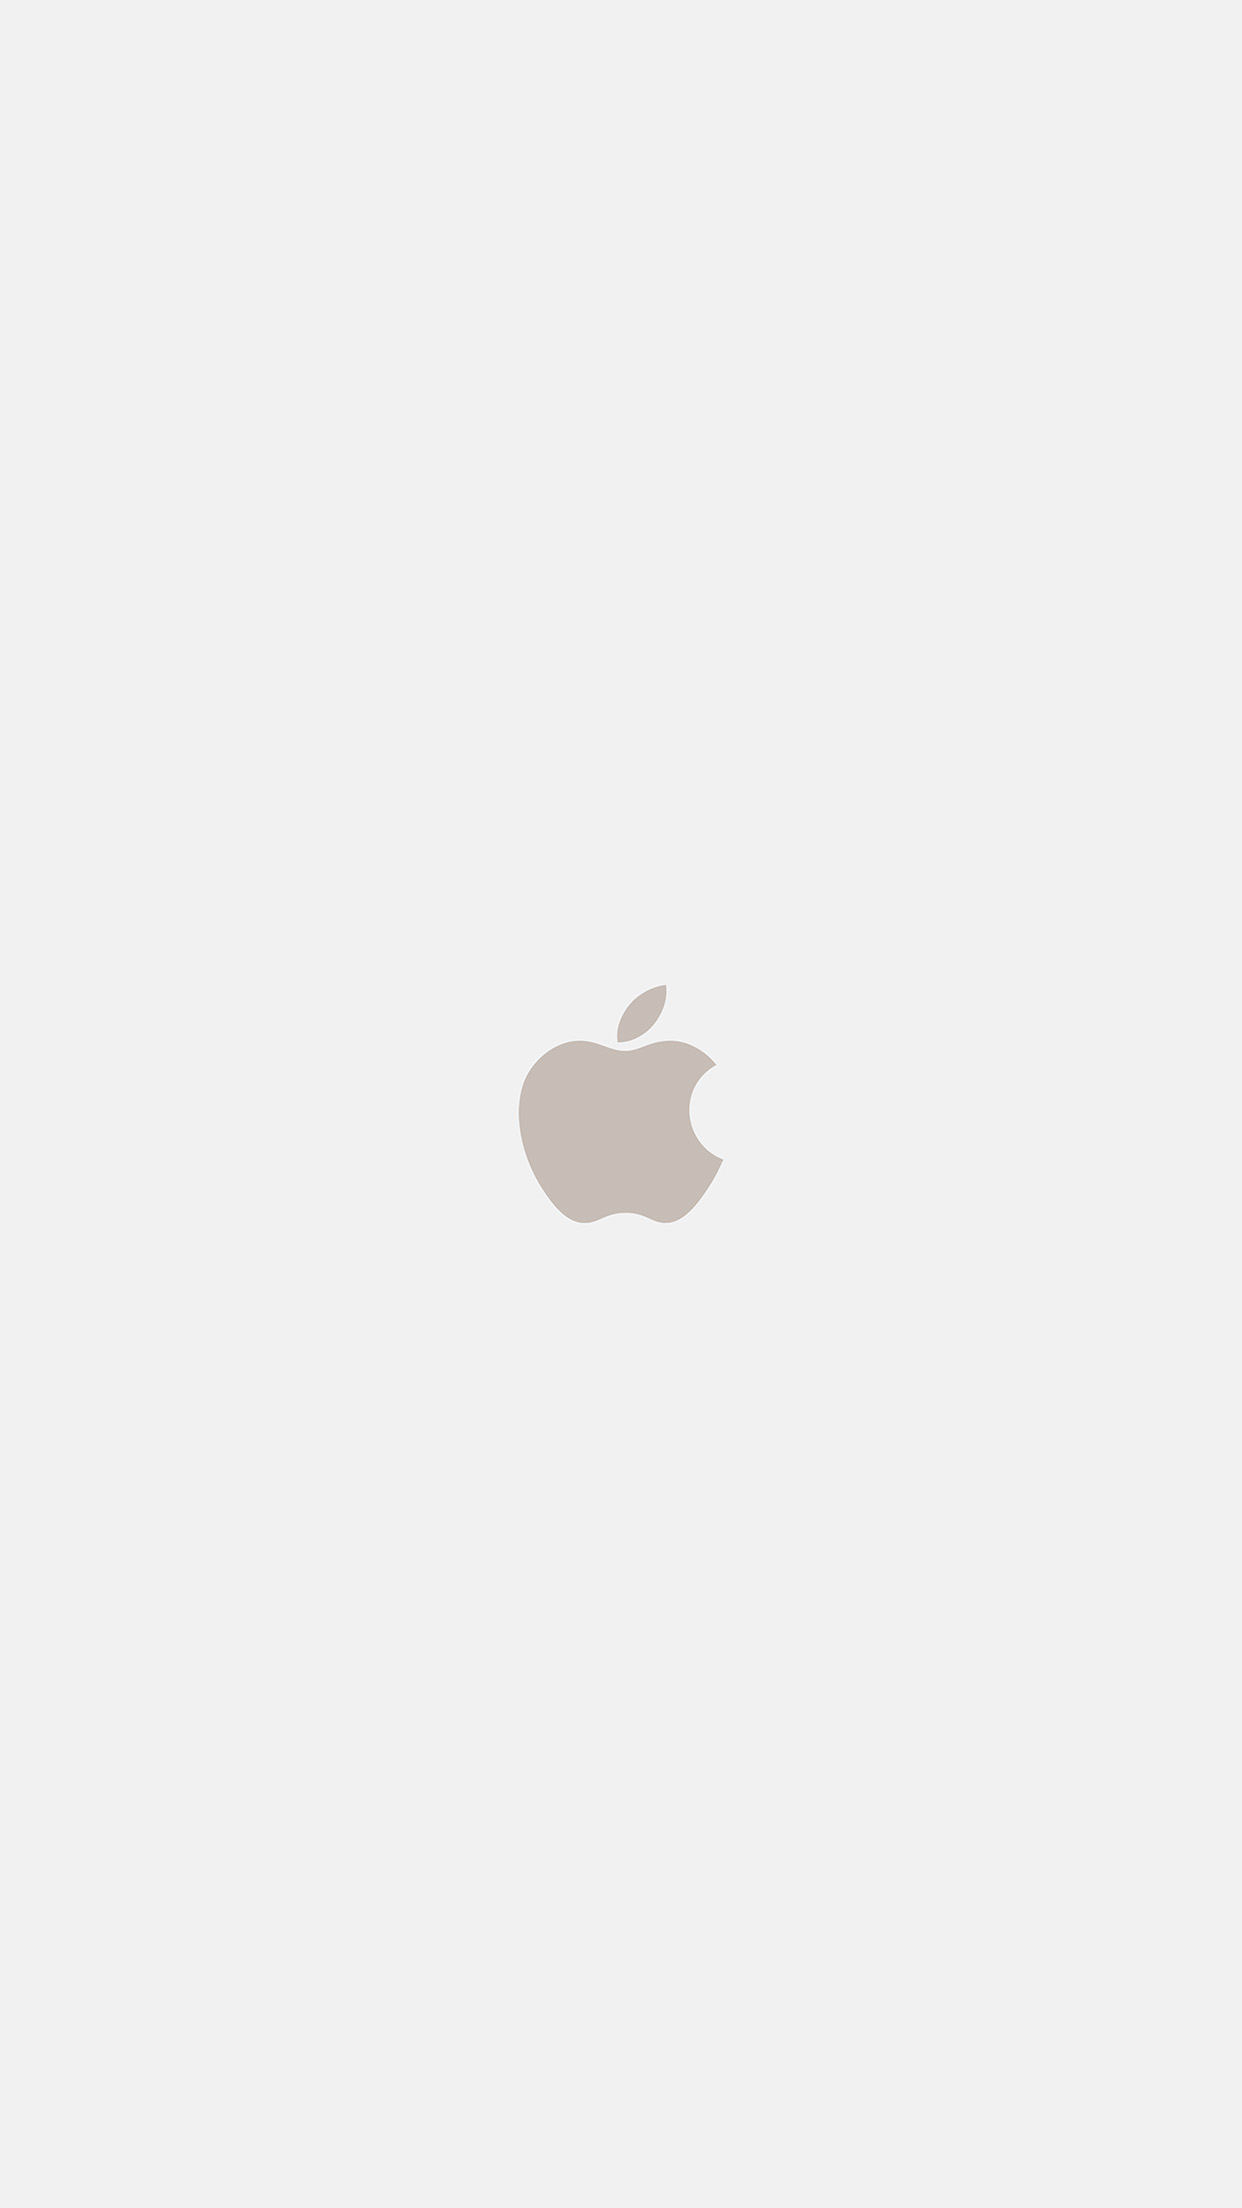 Apple Logo Wallpaper Iphone 7